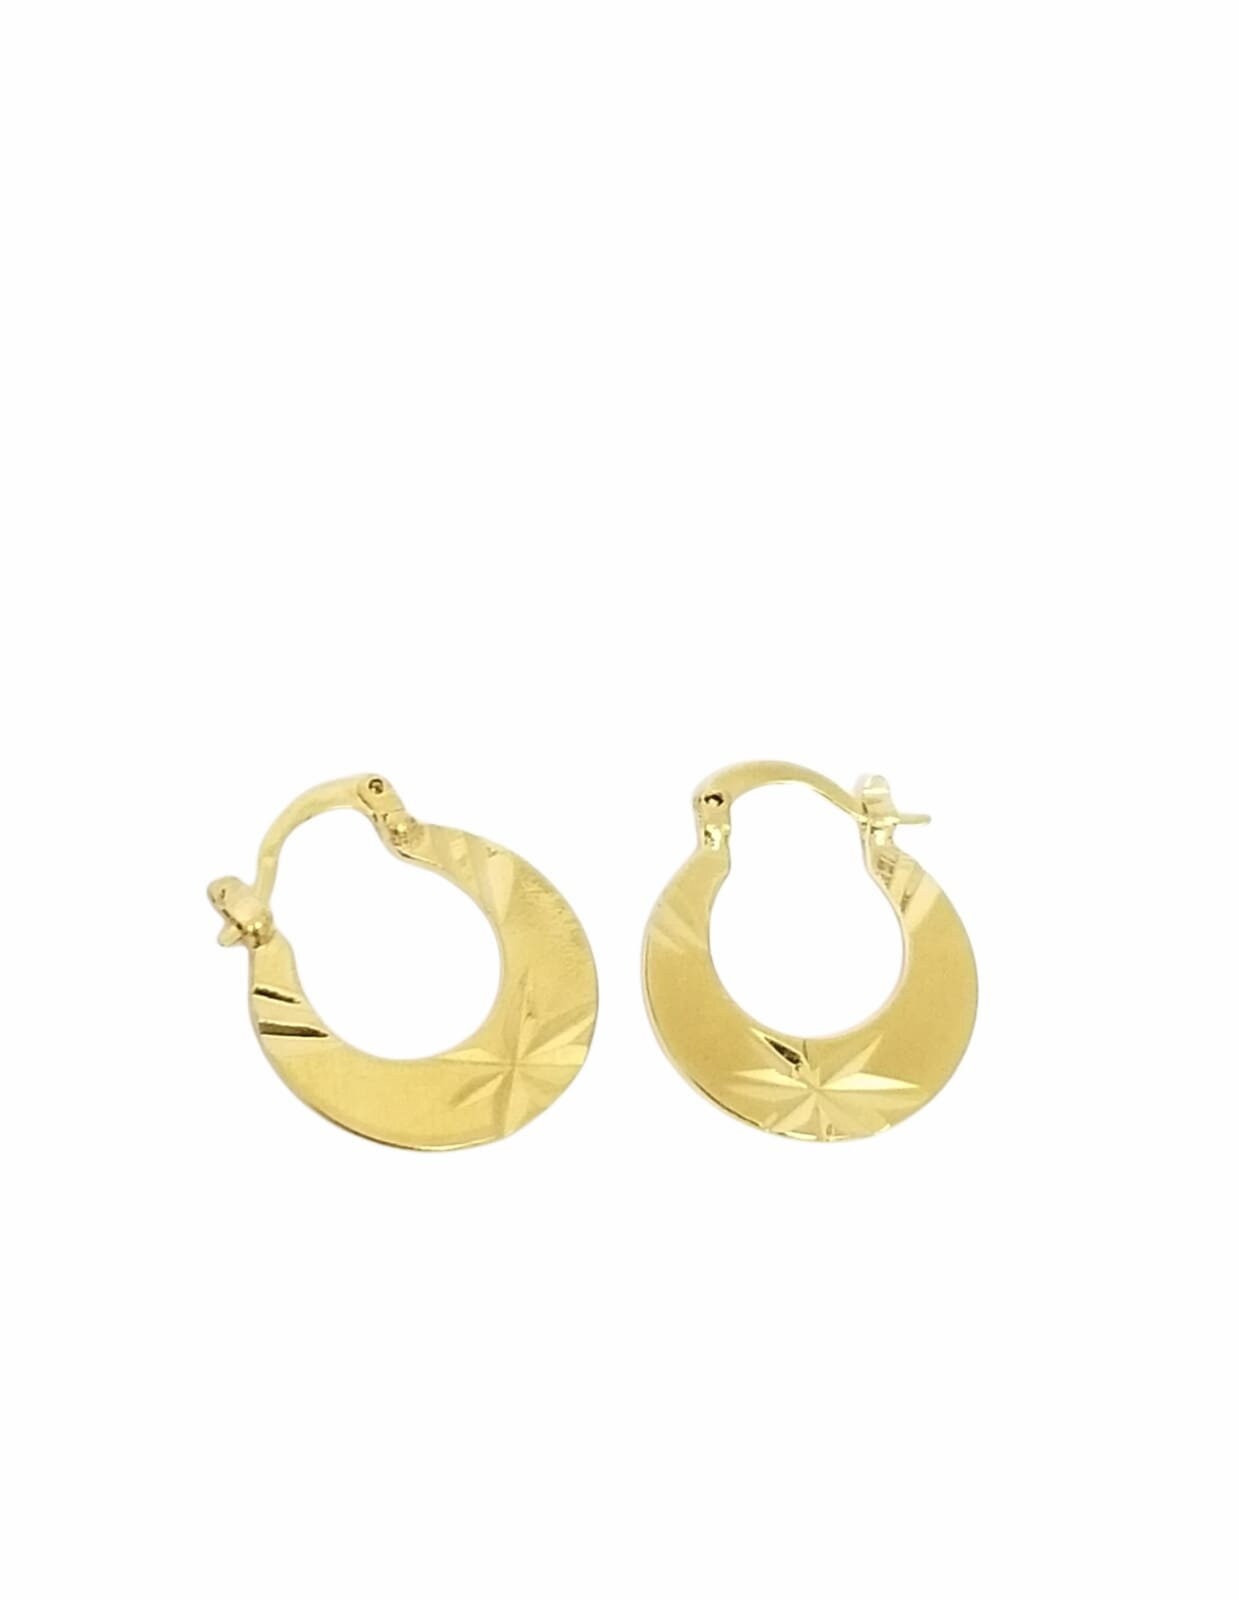 Mens Hoop Earrings Stainless Steel Earring Punk Geometry Earrings Gold  Round Earrings For Women Men Hoop Earrings Jewelry  Hoop Earrings   AliExpress